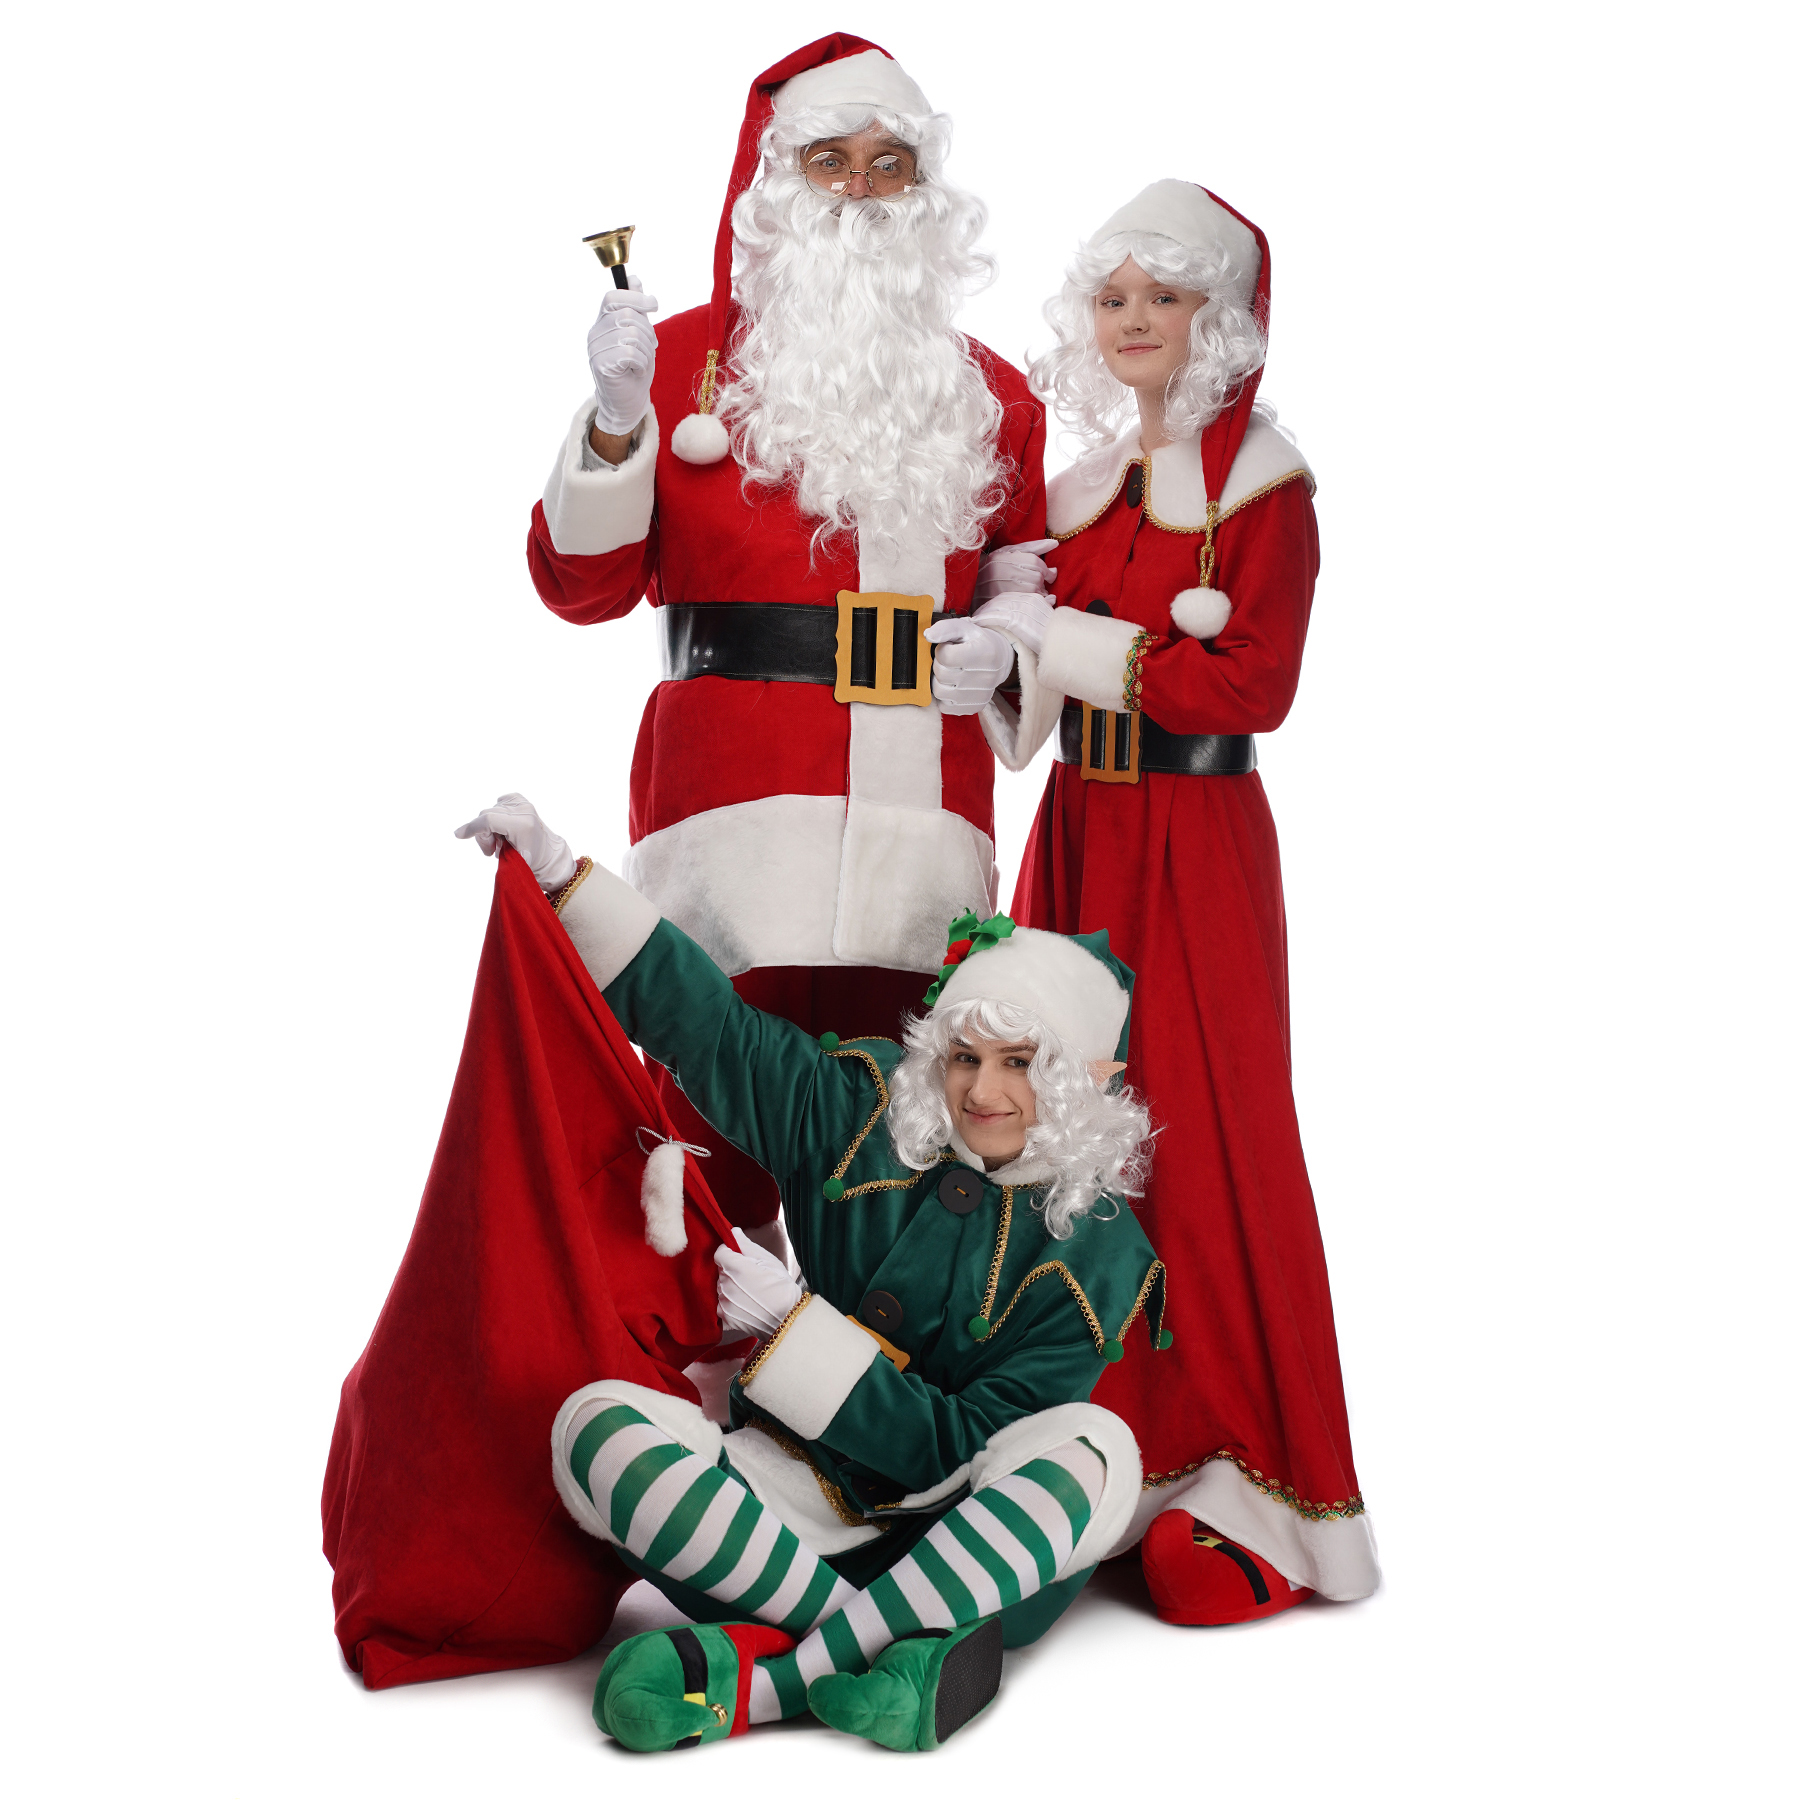 Christmas helper costumes